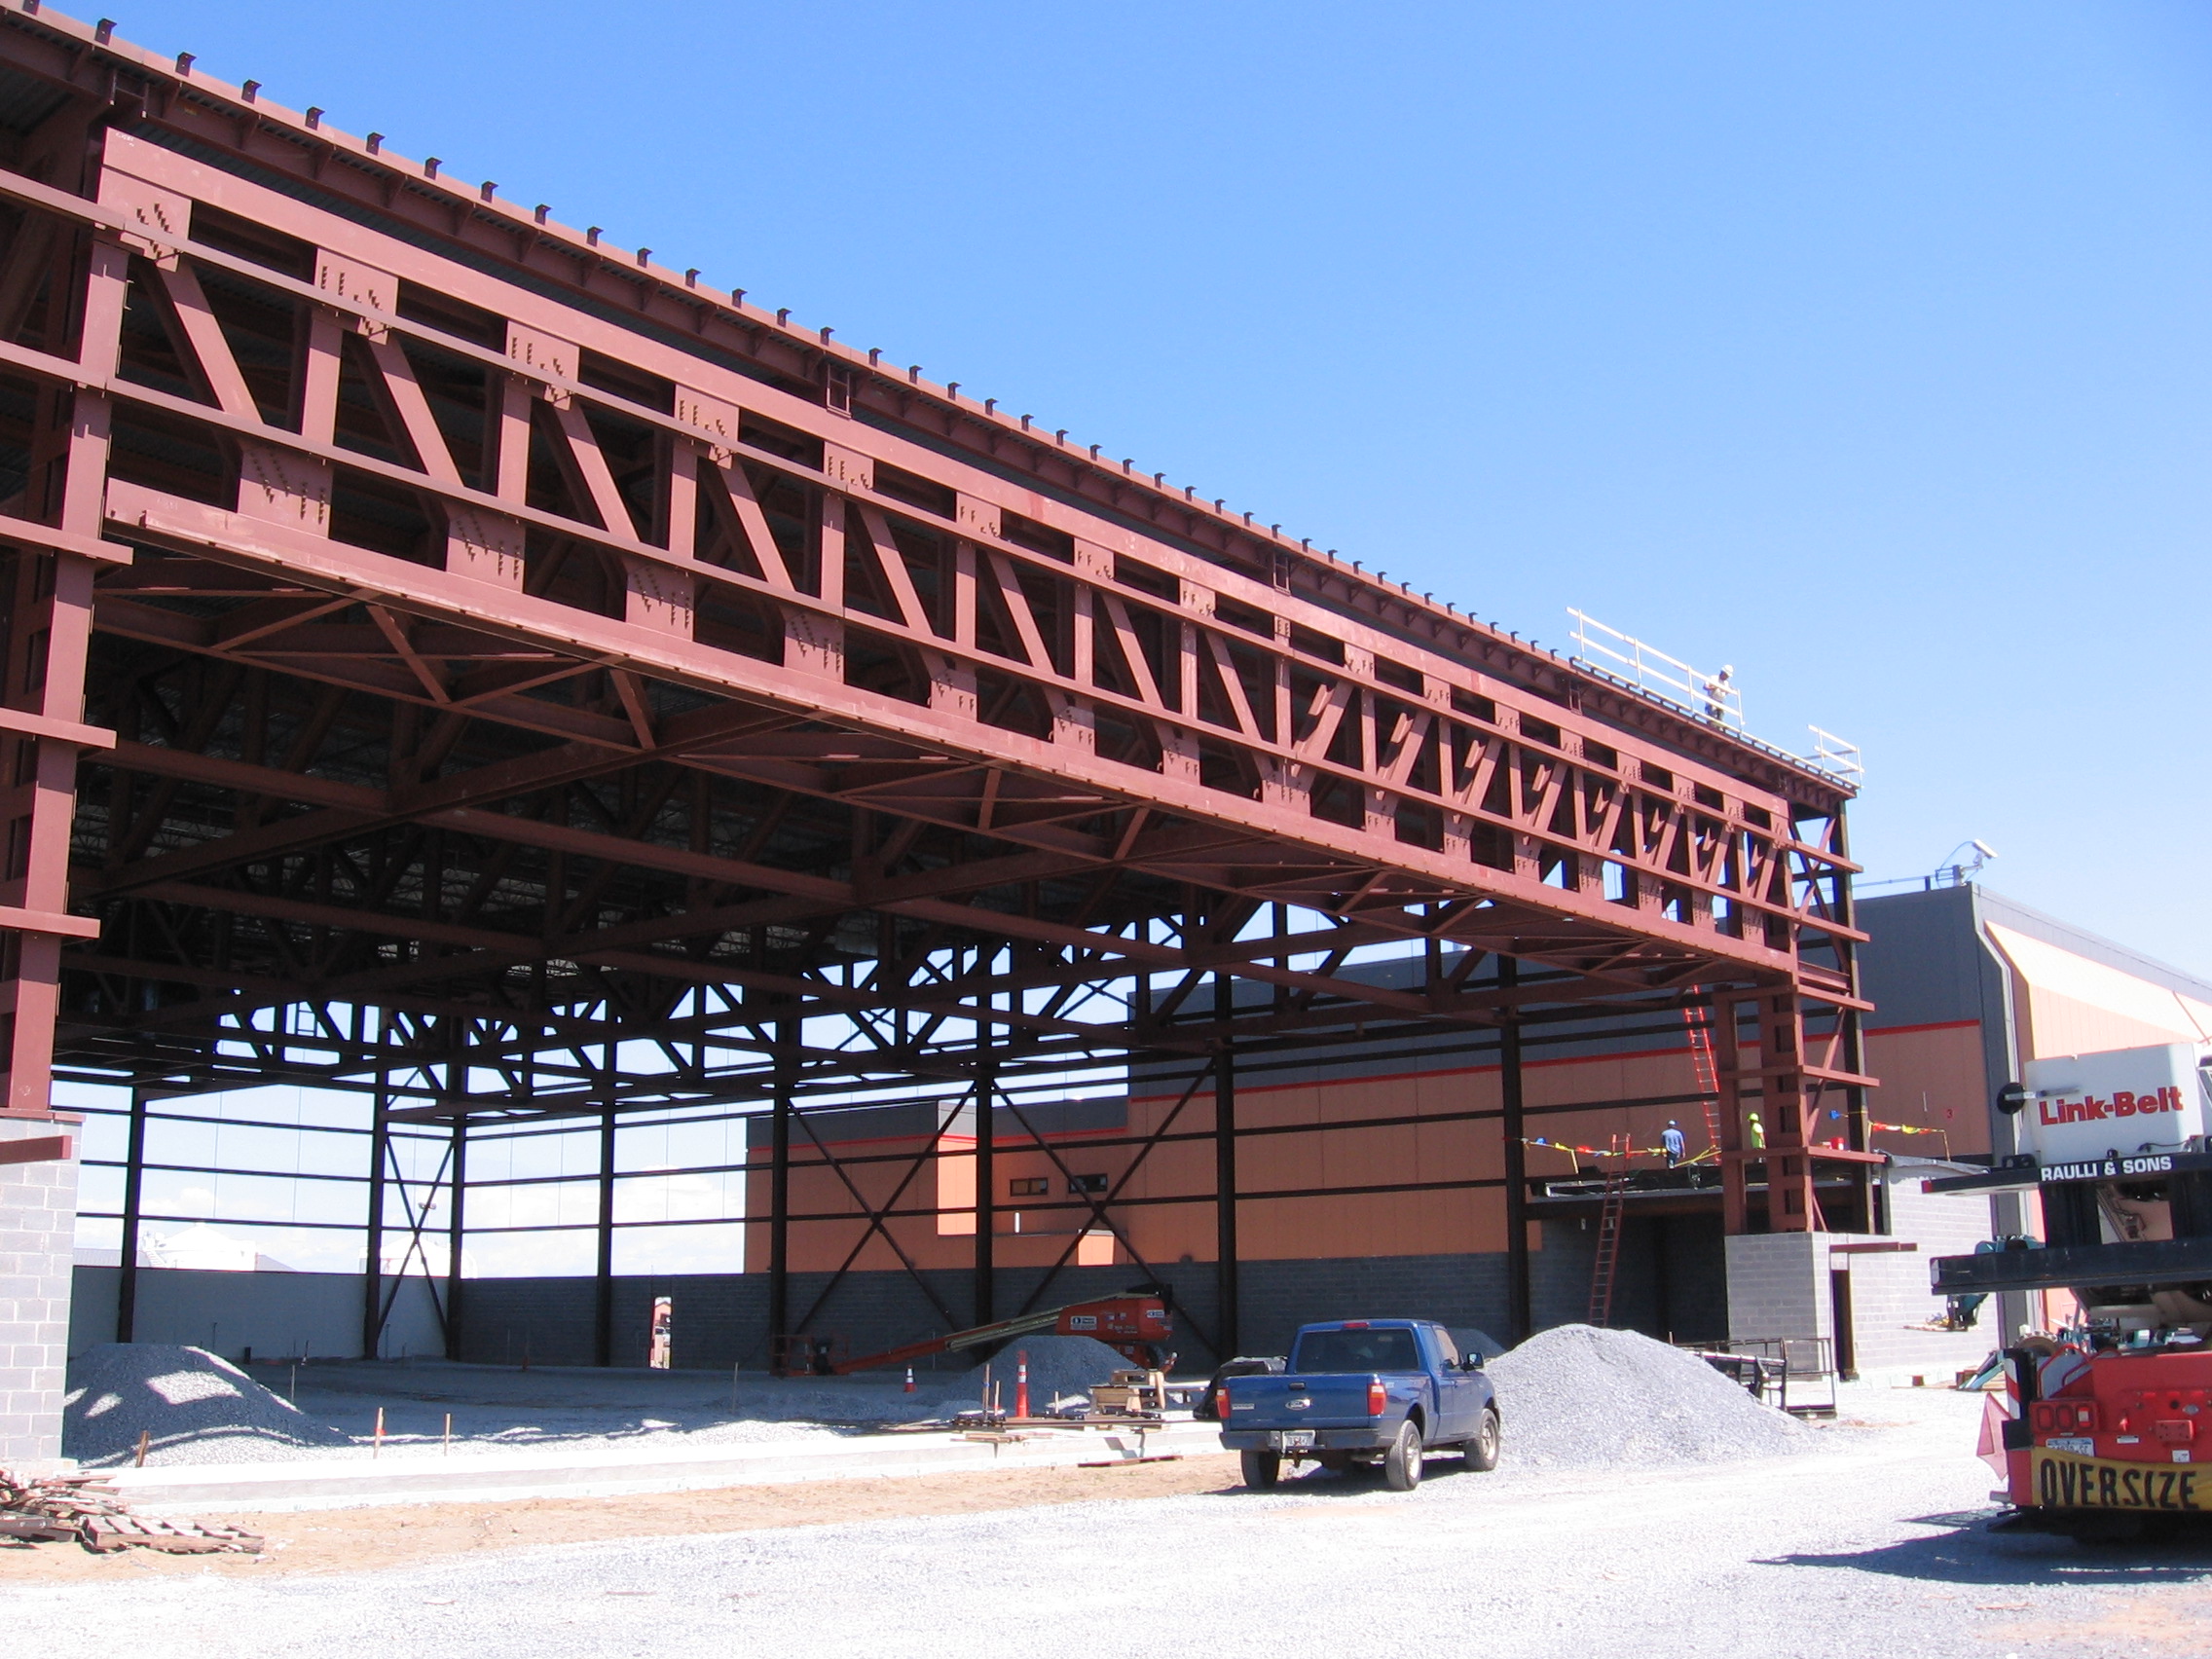 John P. Stopen Fort Drum Hangar Project construction